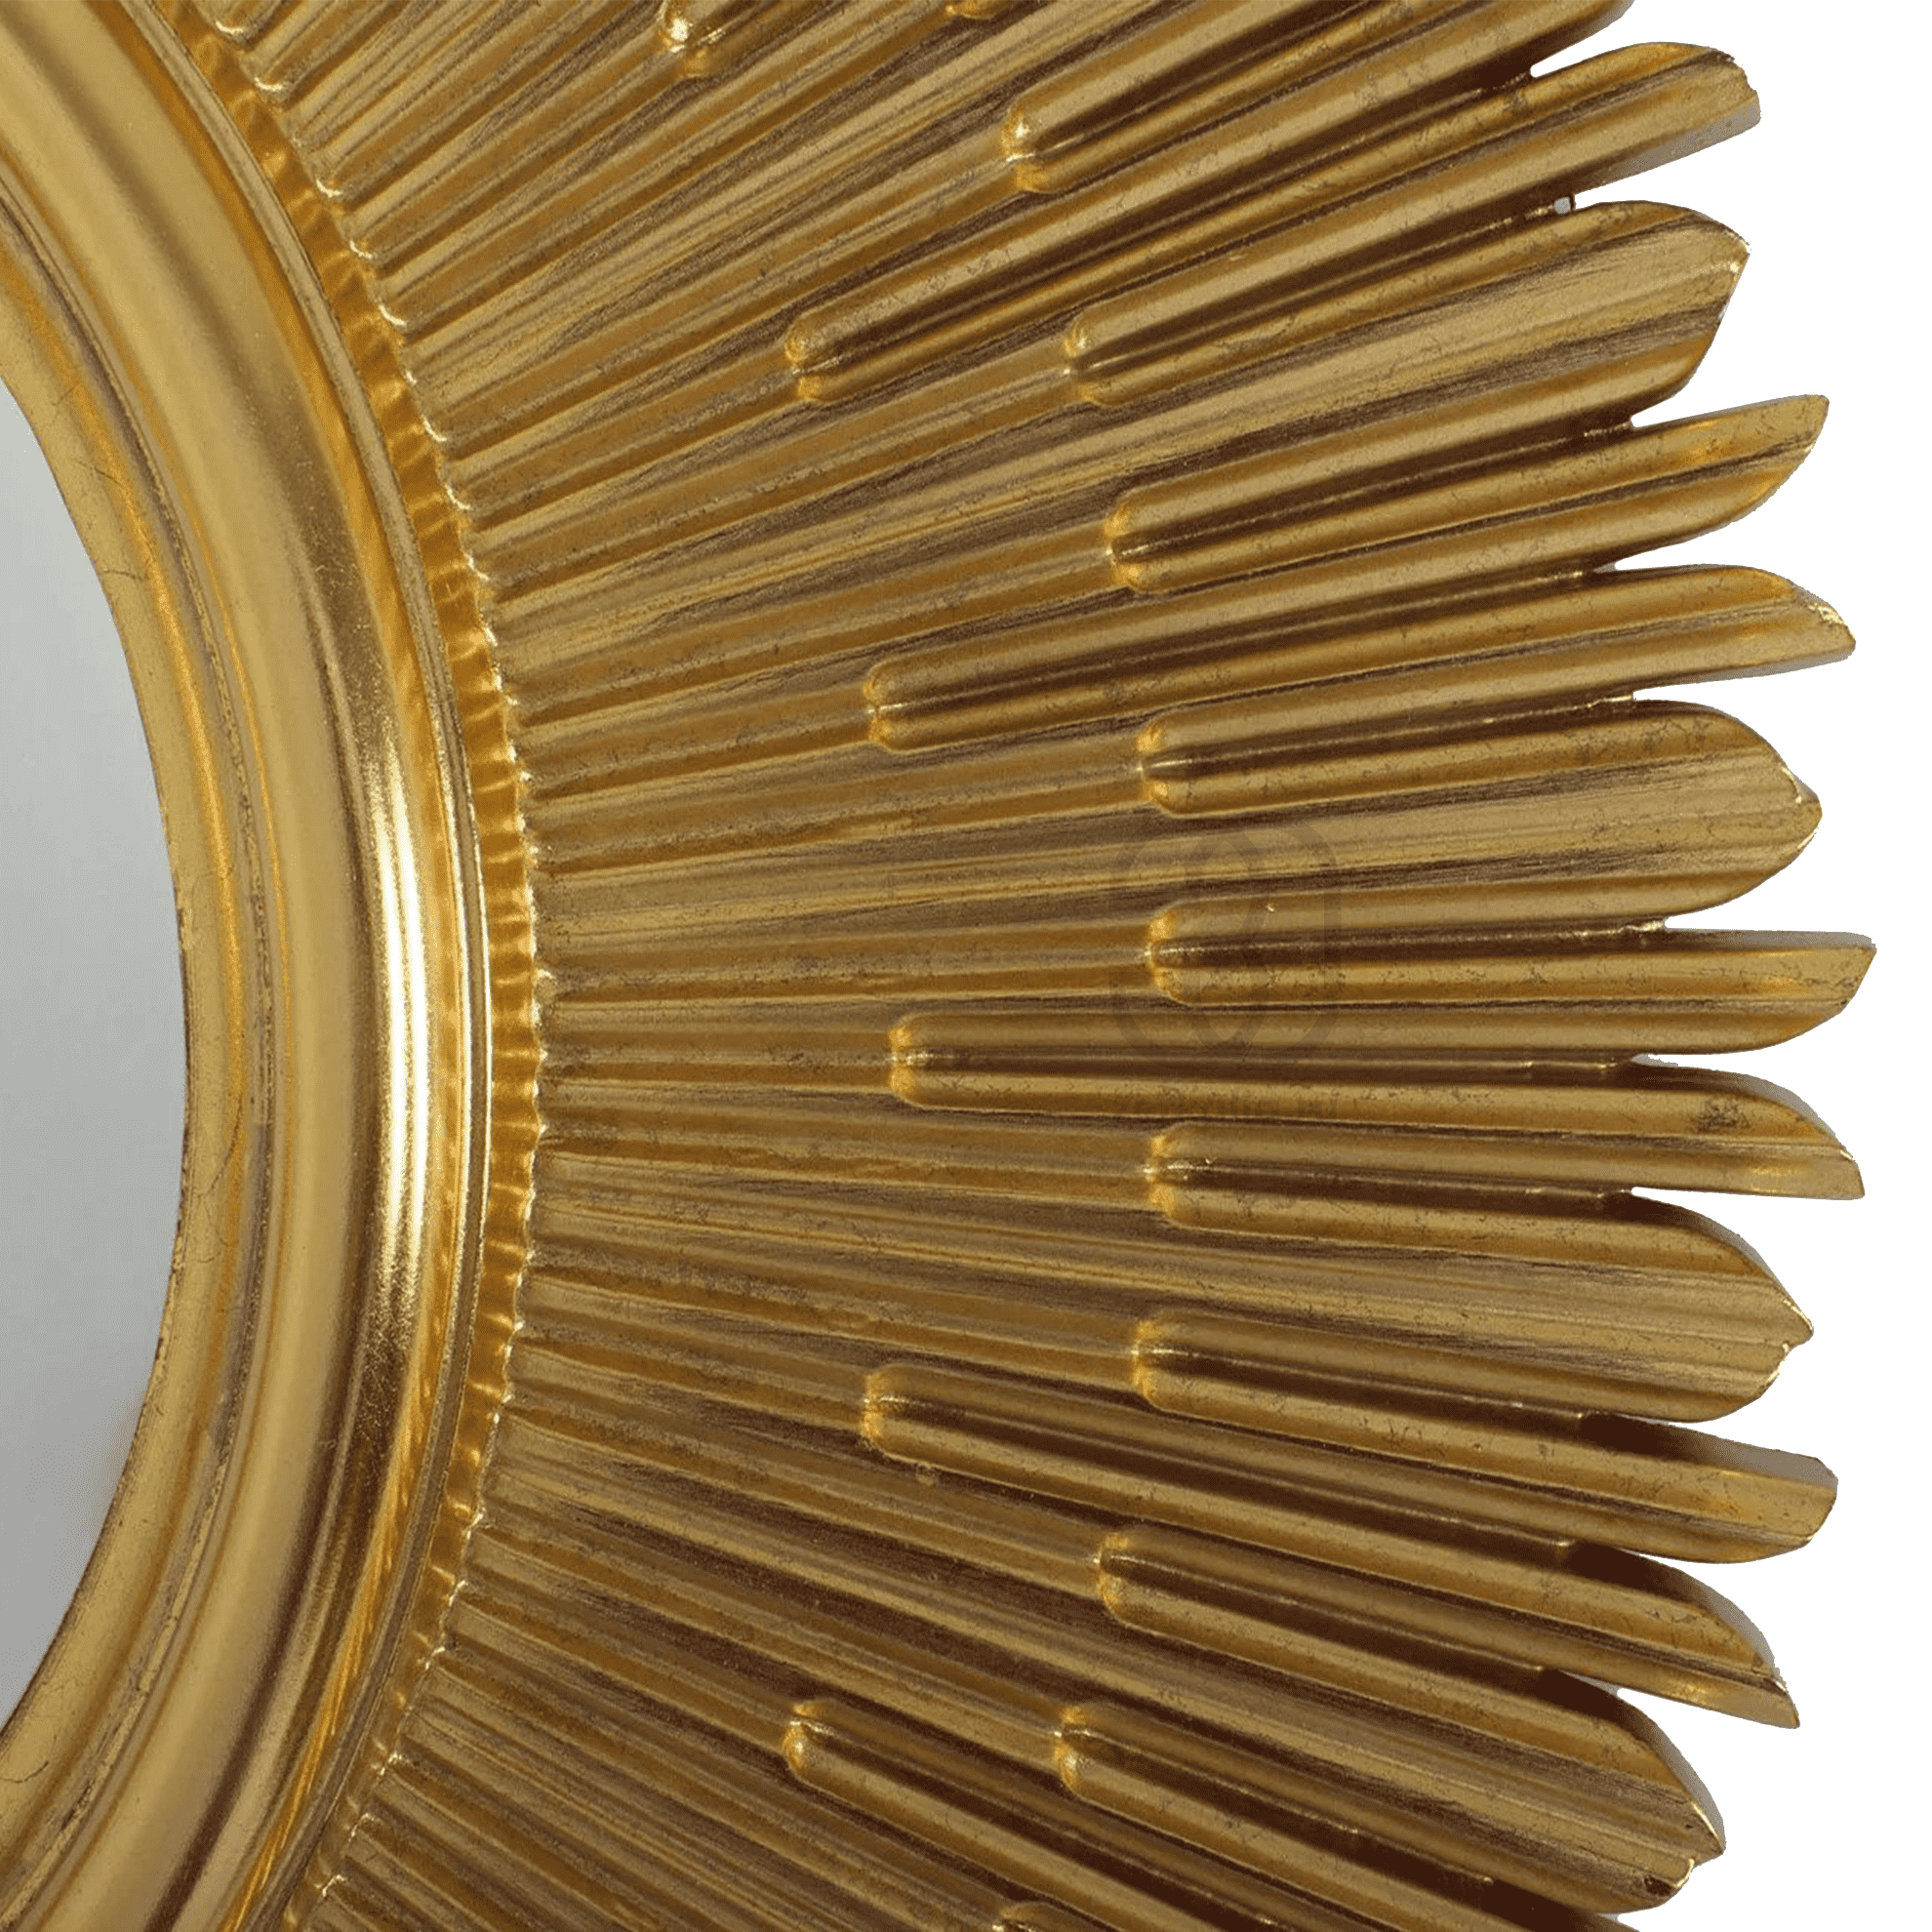 Зеркало gold. Настенное зеркало солнце лучистое золотое, 50 см, Boltze. Зеркало солнце цв.золото д49см. Зеркало-солнце Эштон Gold.